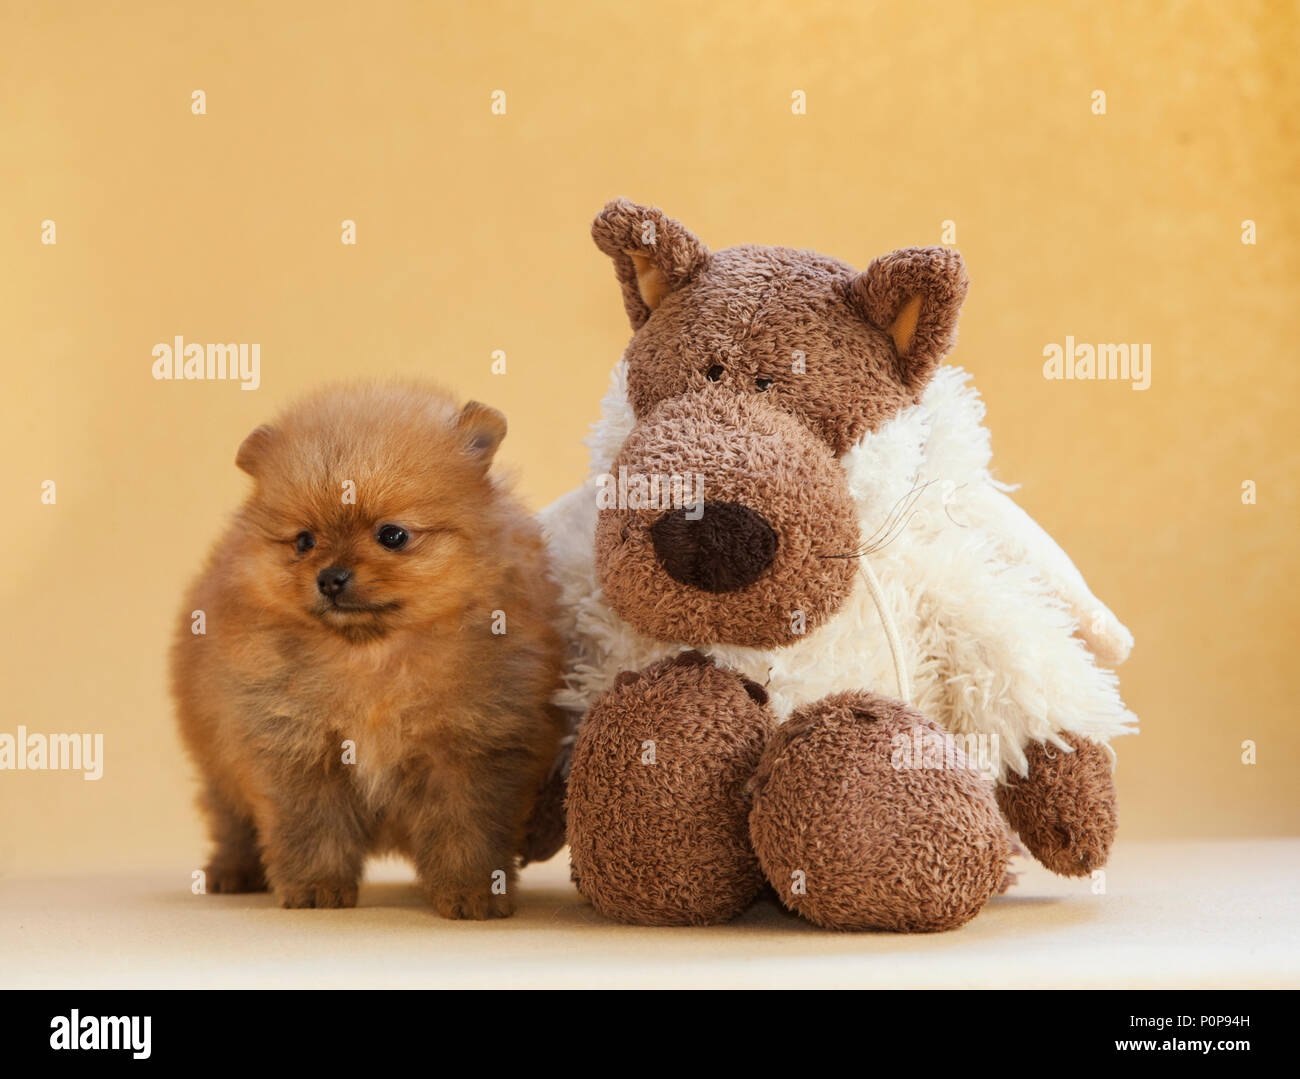 how much are teddy bear pomeranians